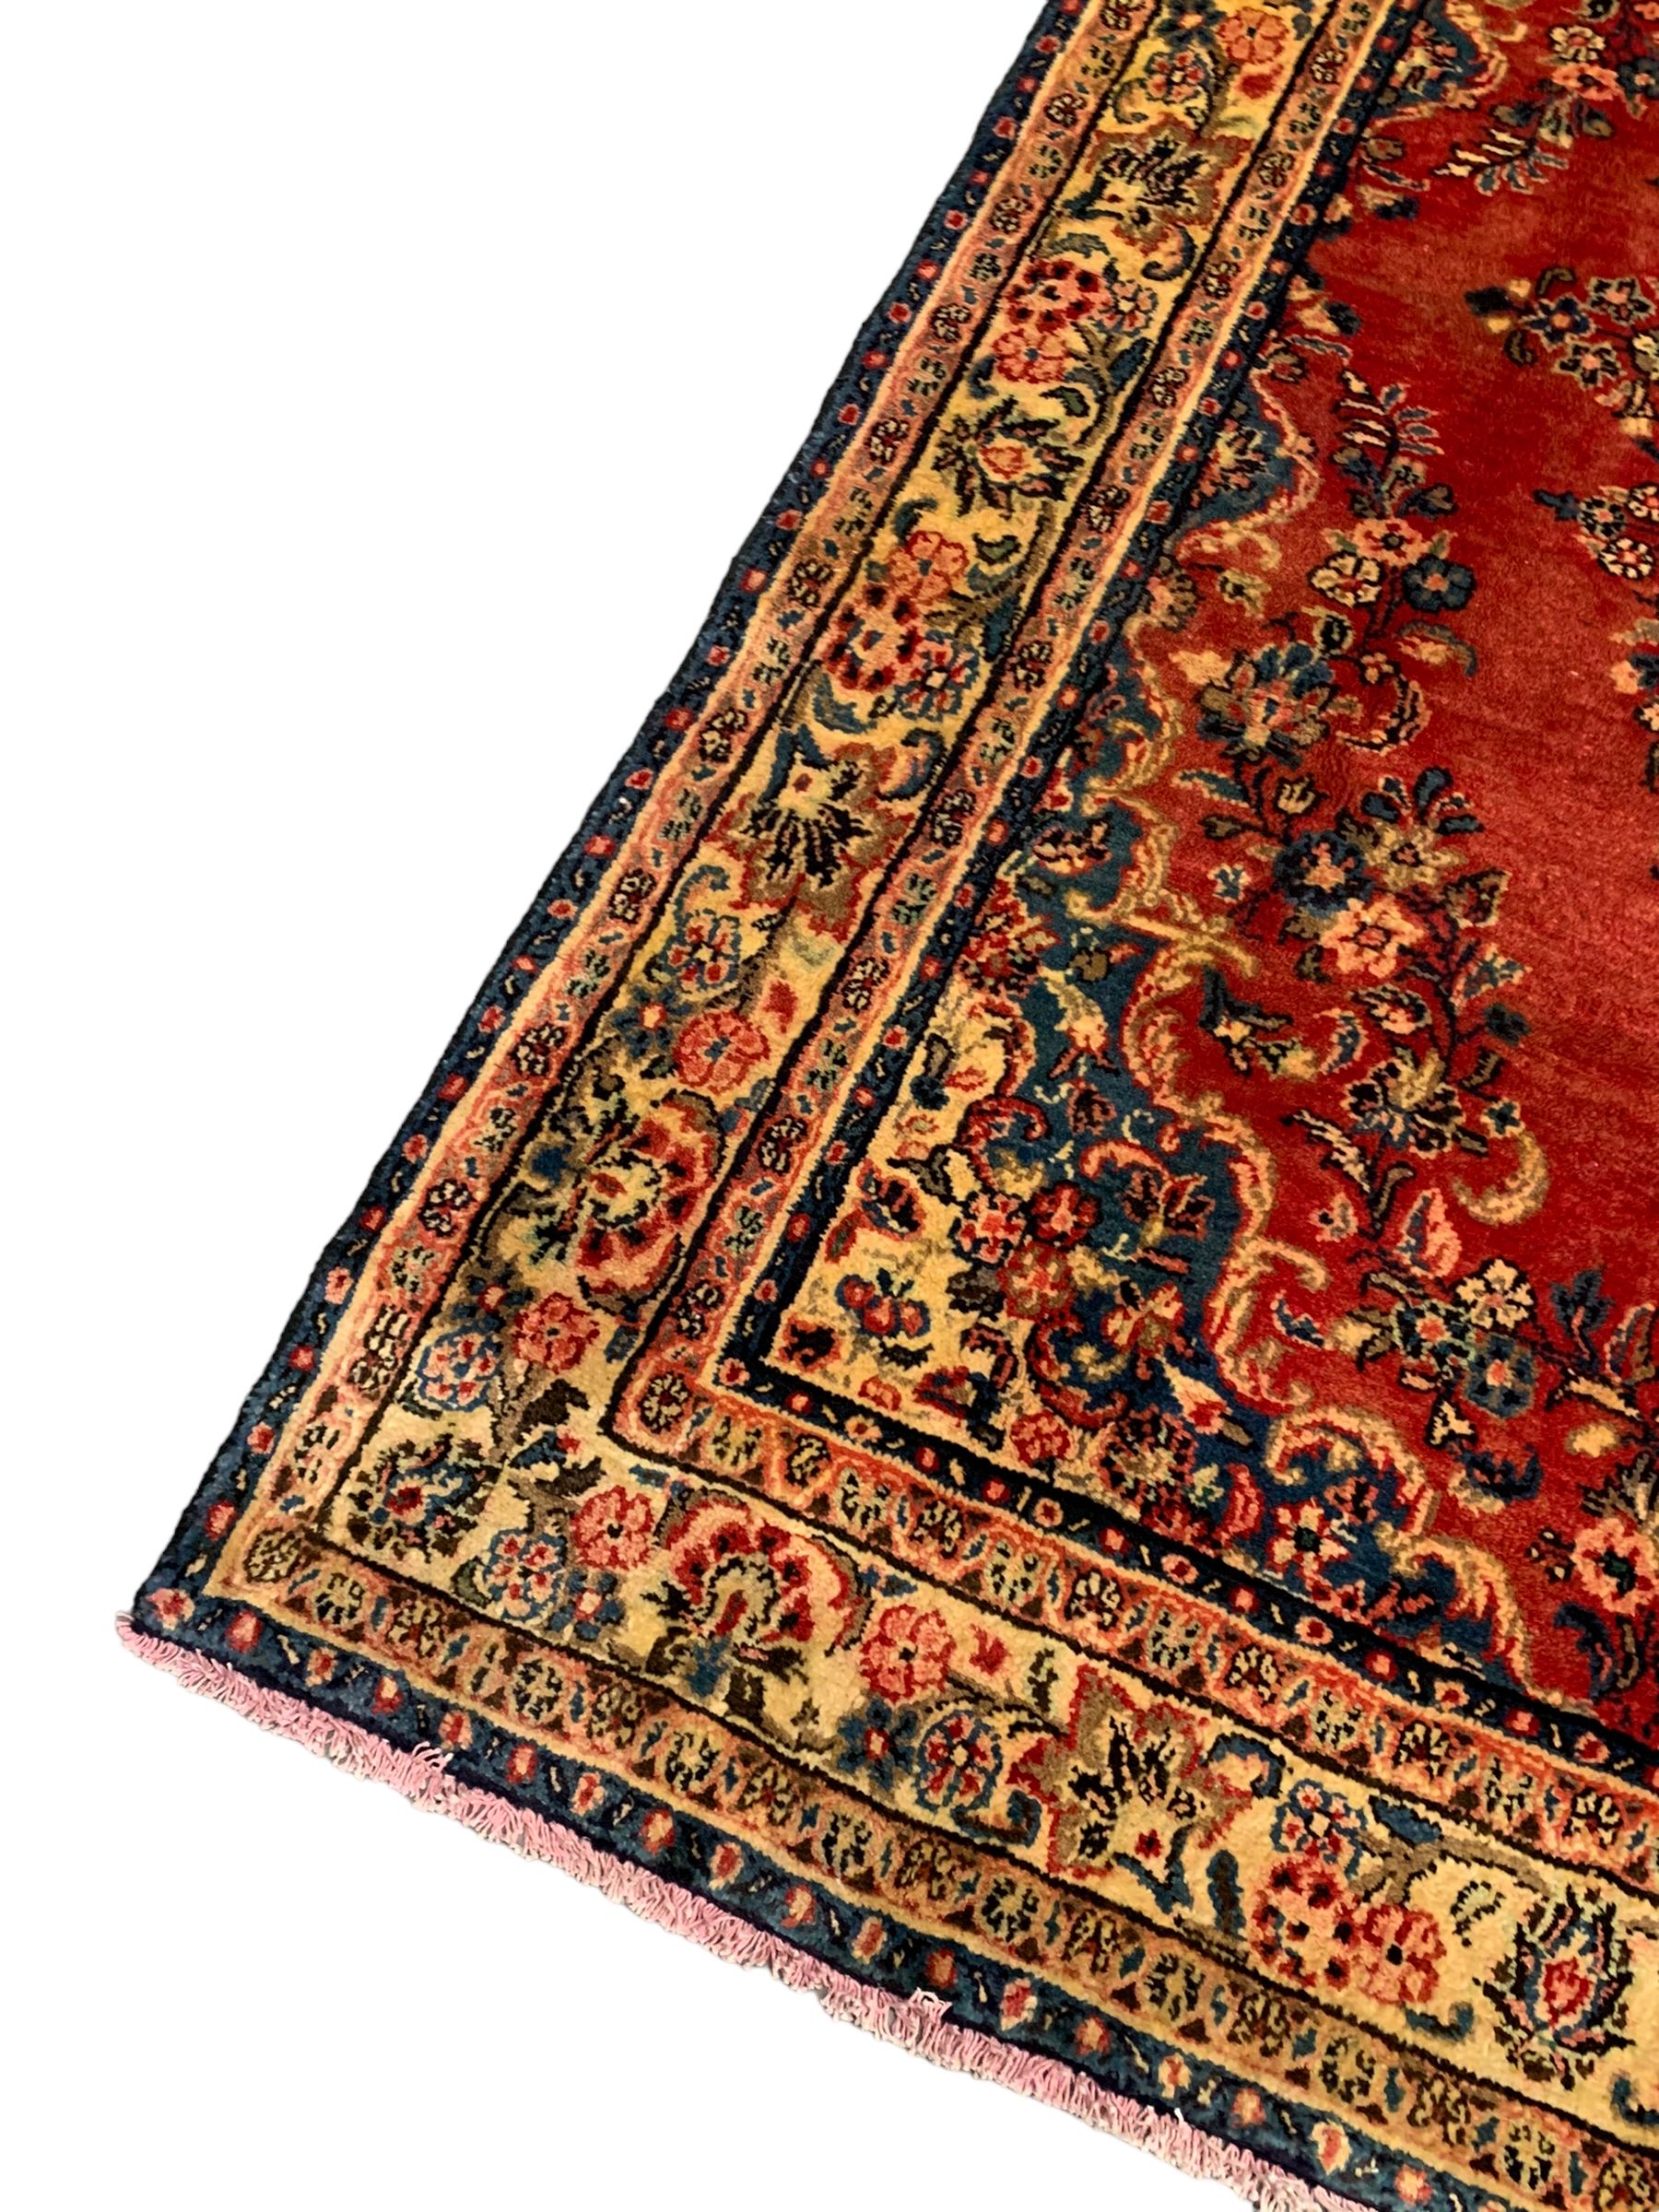 Persian crimson ground rug - Image 4 of 8